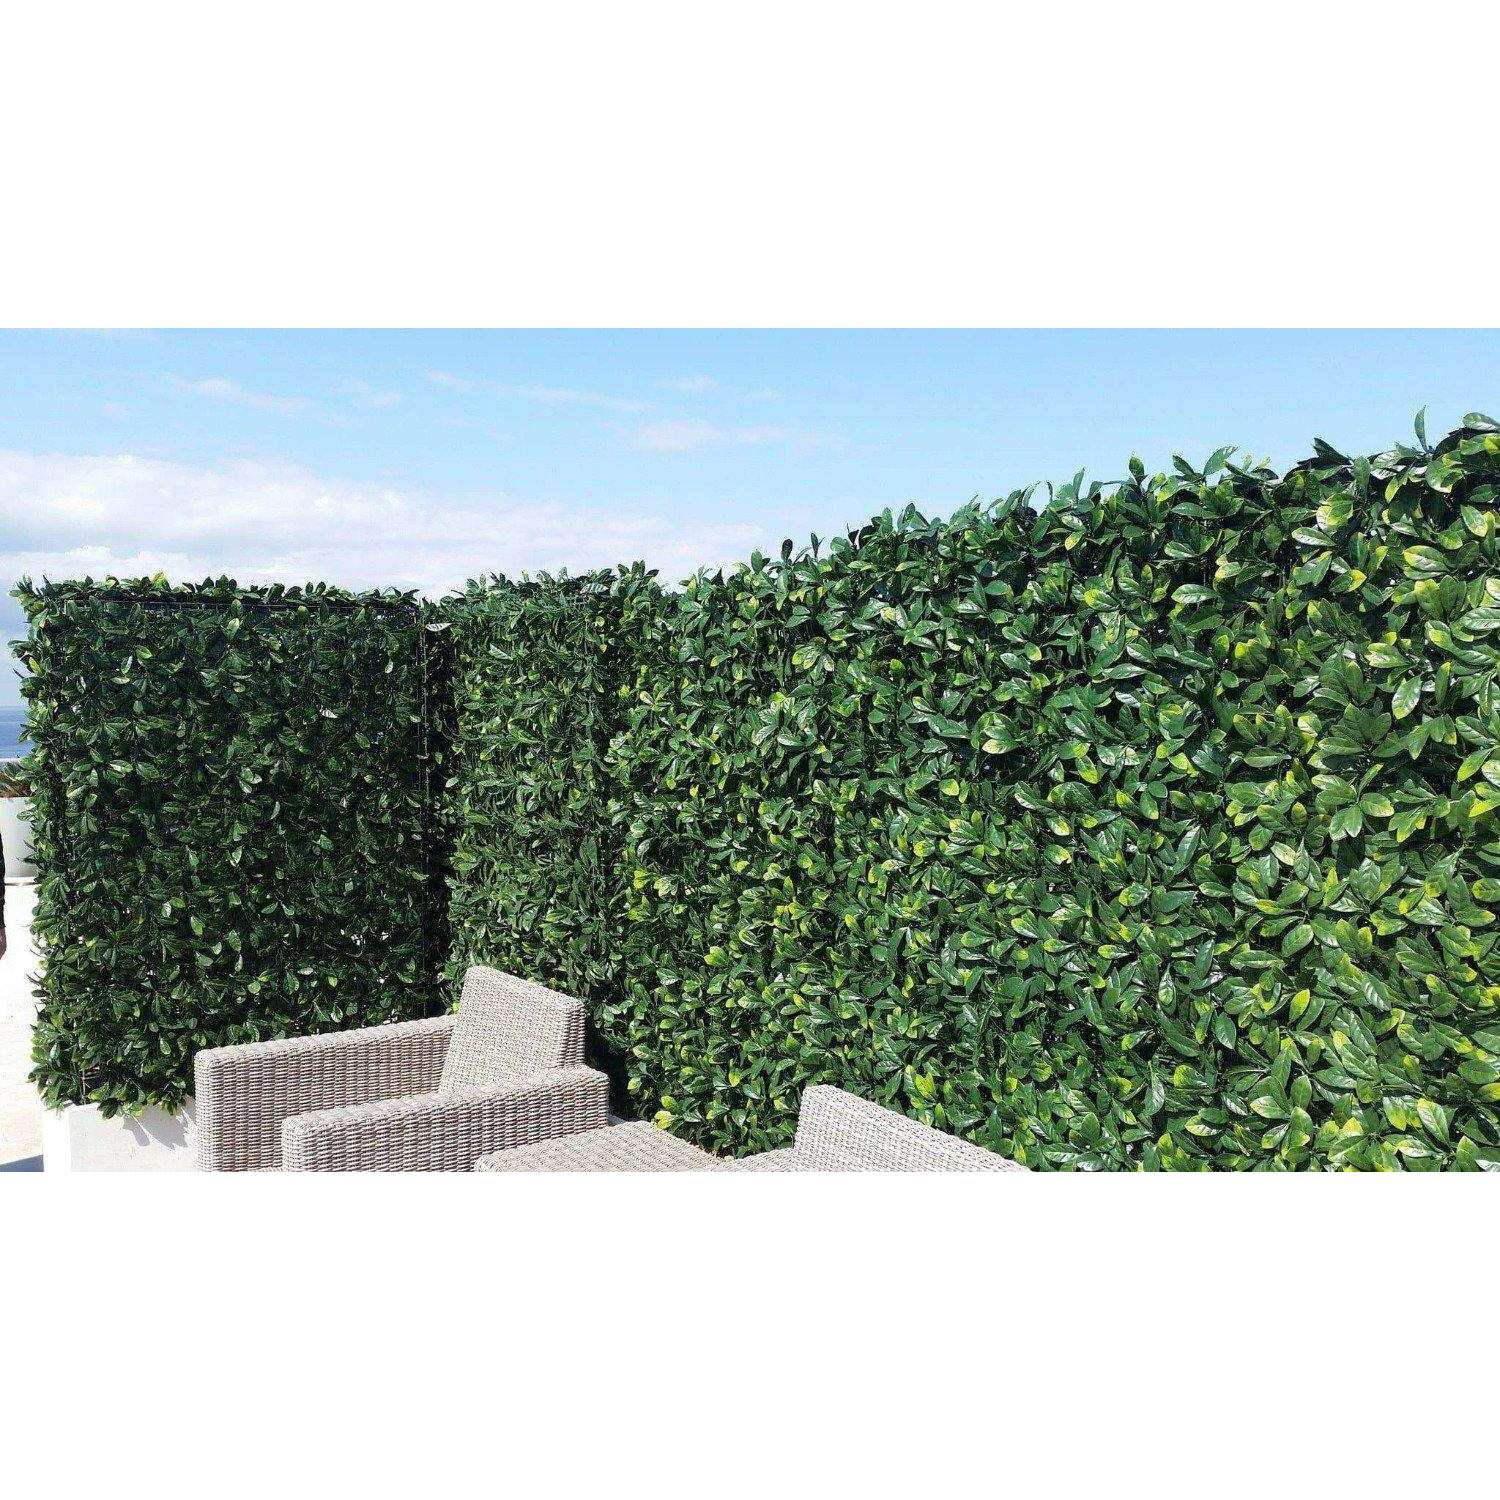 Lemon Leaf Artificial Hedge Panel / Fake Vertical Garden 1m x 1m UV Resistant - Designer Vertical Gardens artificial garden wall plants artificial green wall australia